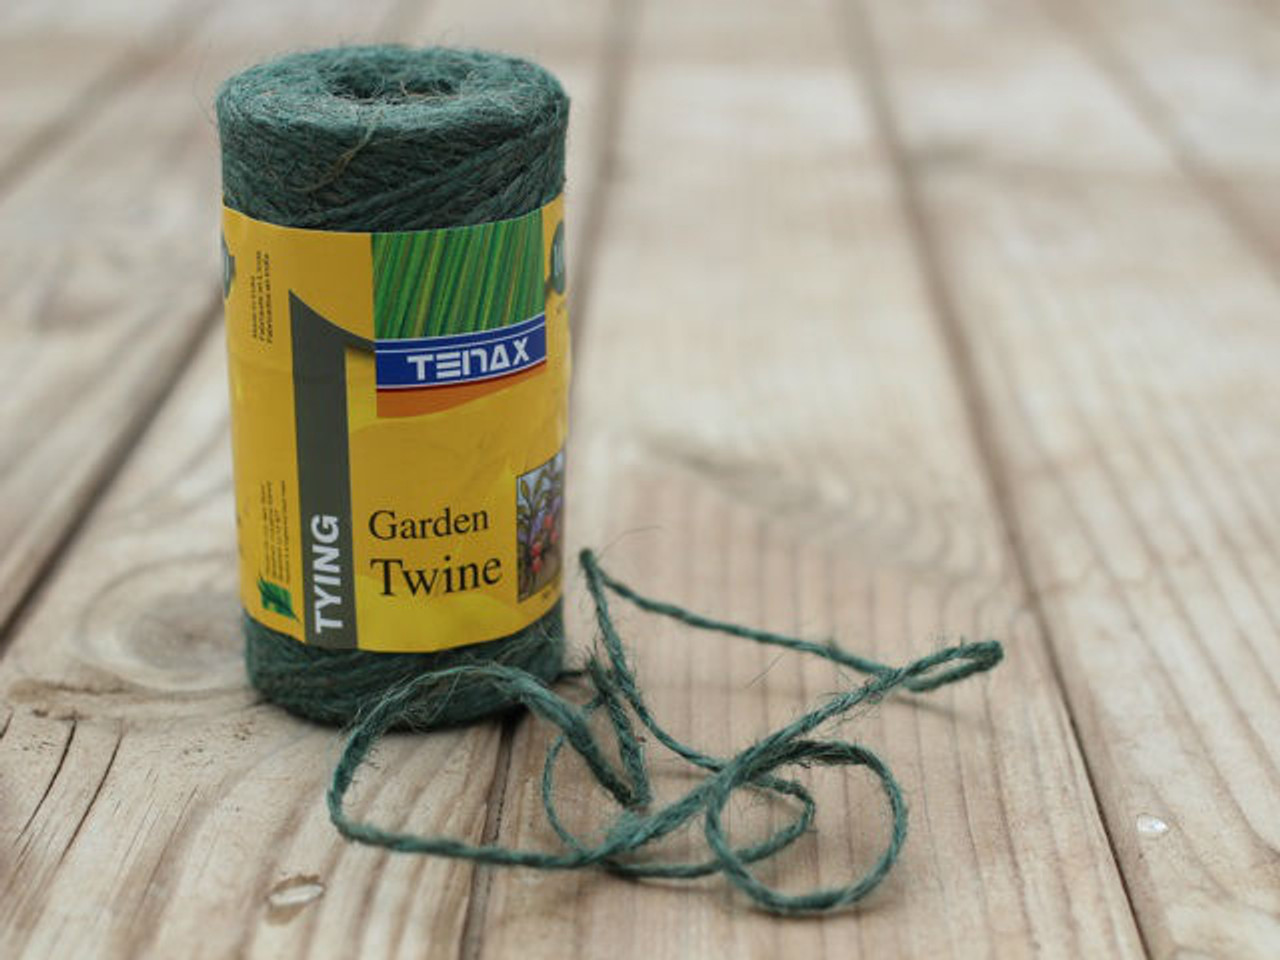 Gardening Twine - For Tying Plants & General Garden Use 100m